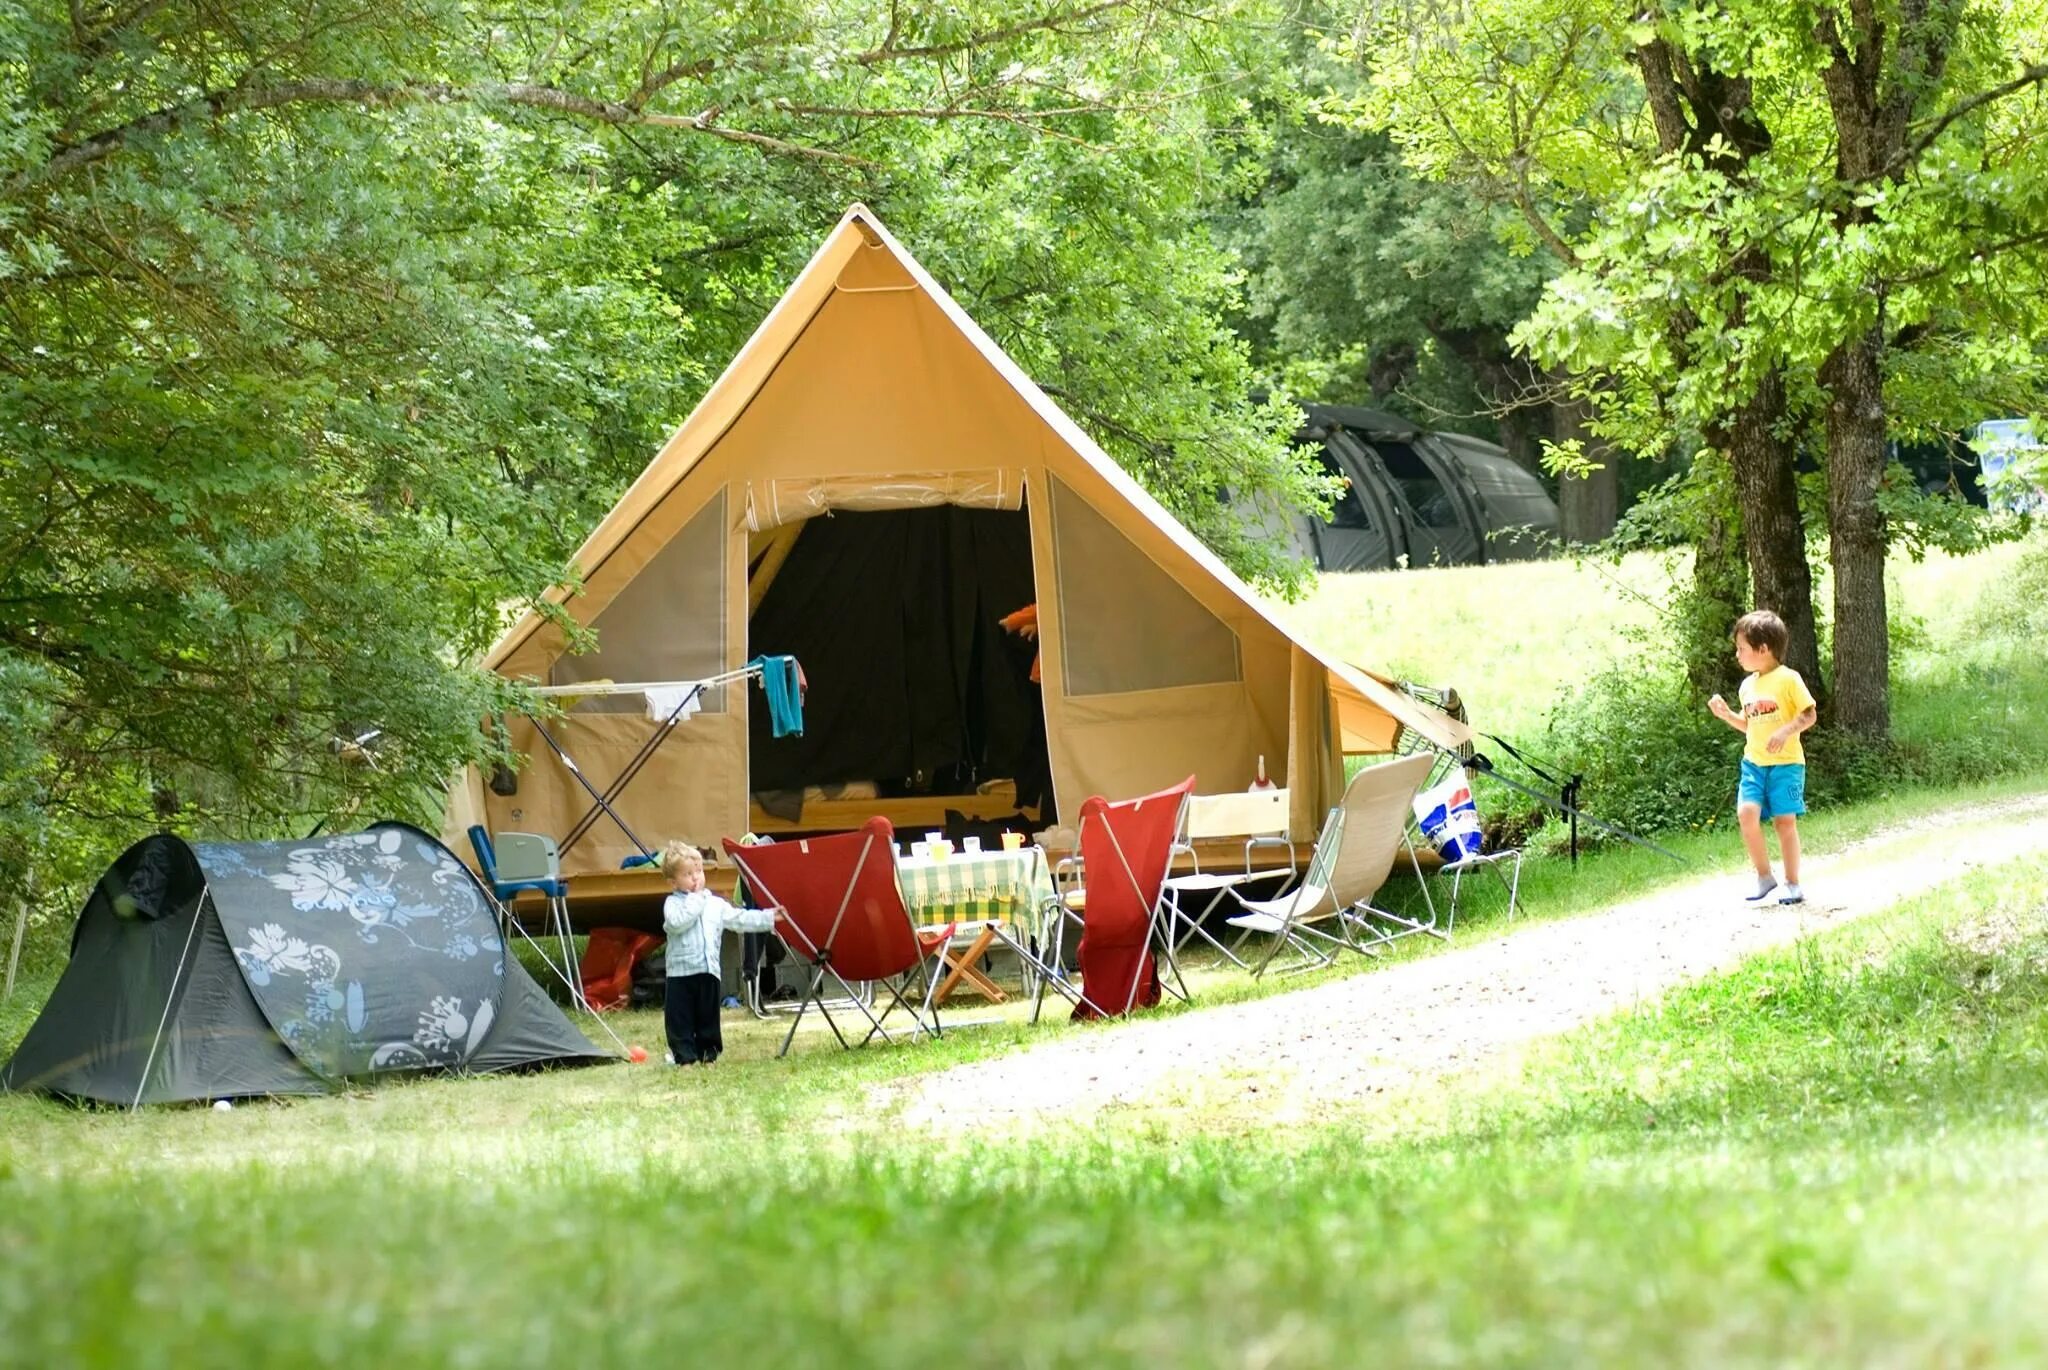 Ntrman camp. Лагерь кемпинг Молдова. Кемпинг бивуак Терскол. Alakol Camp кемпинг. Лагерь модульный (шатер и 2 палатки) Nash Base Camp.